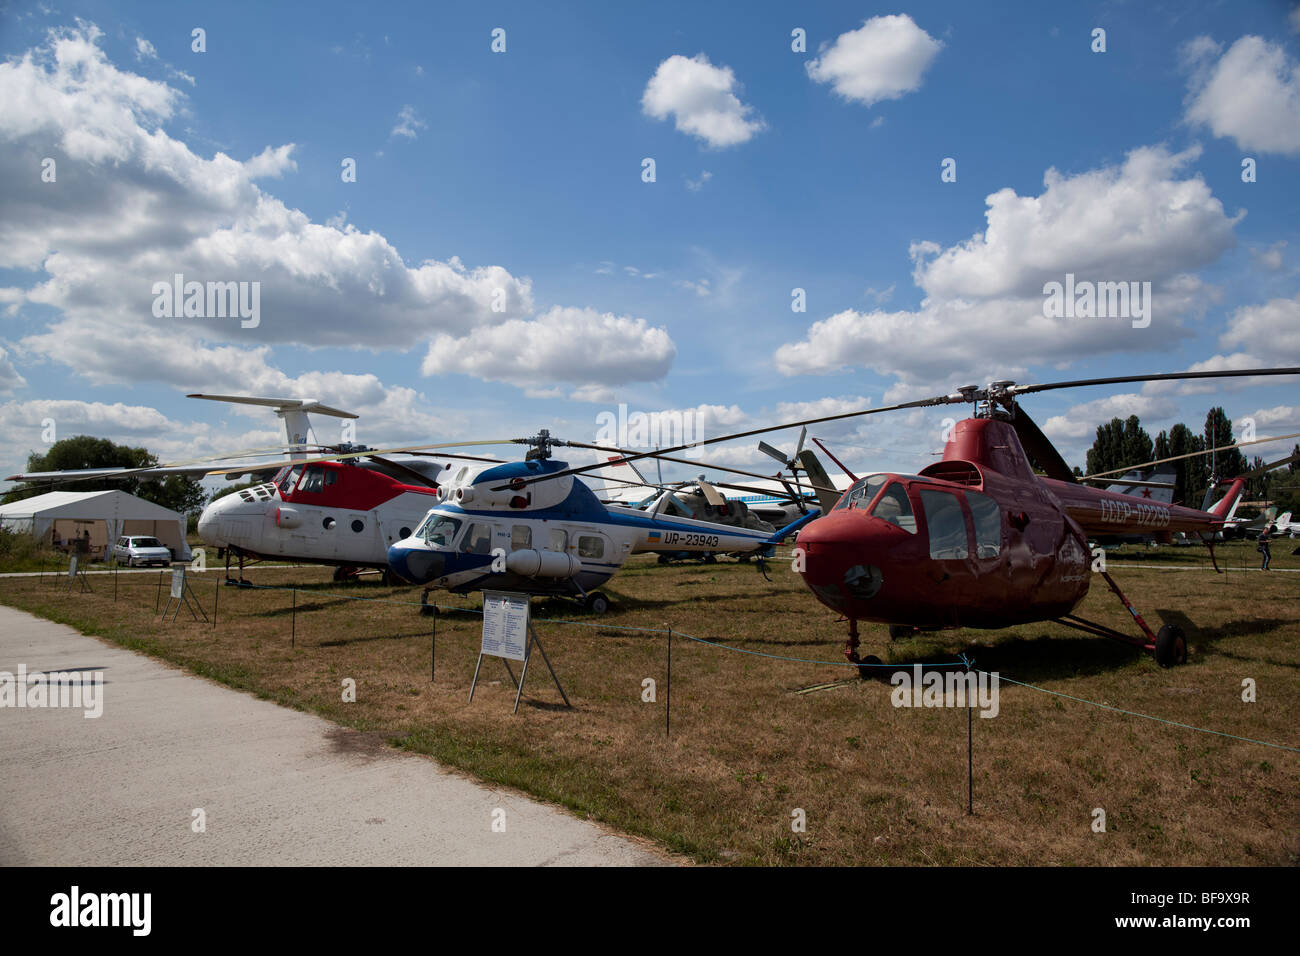 Elicottero storiche sono visibili in ucraino Aviation Museum in Kiev-Zhulyany. Foto Stock